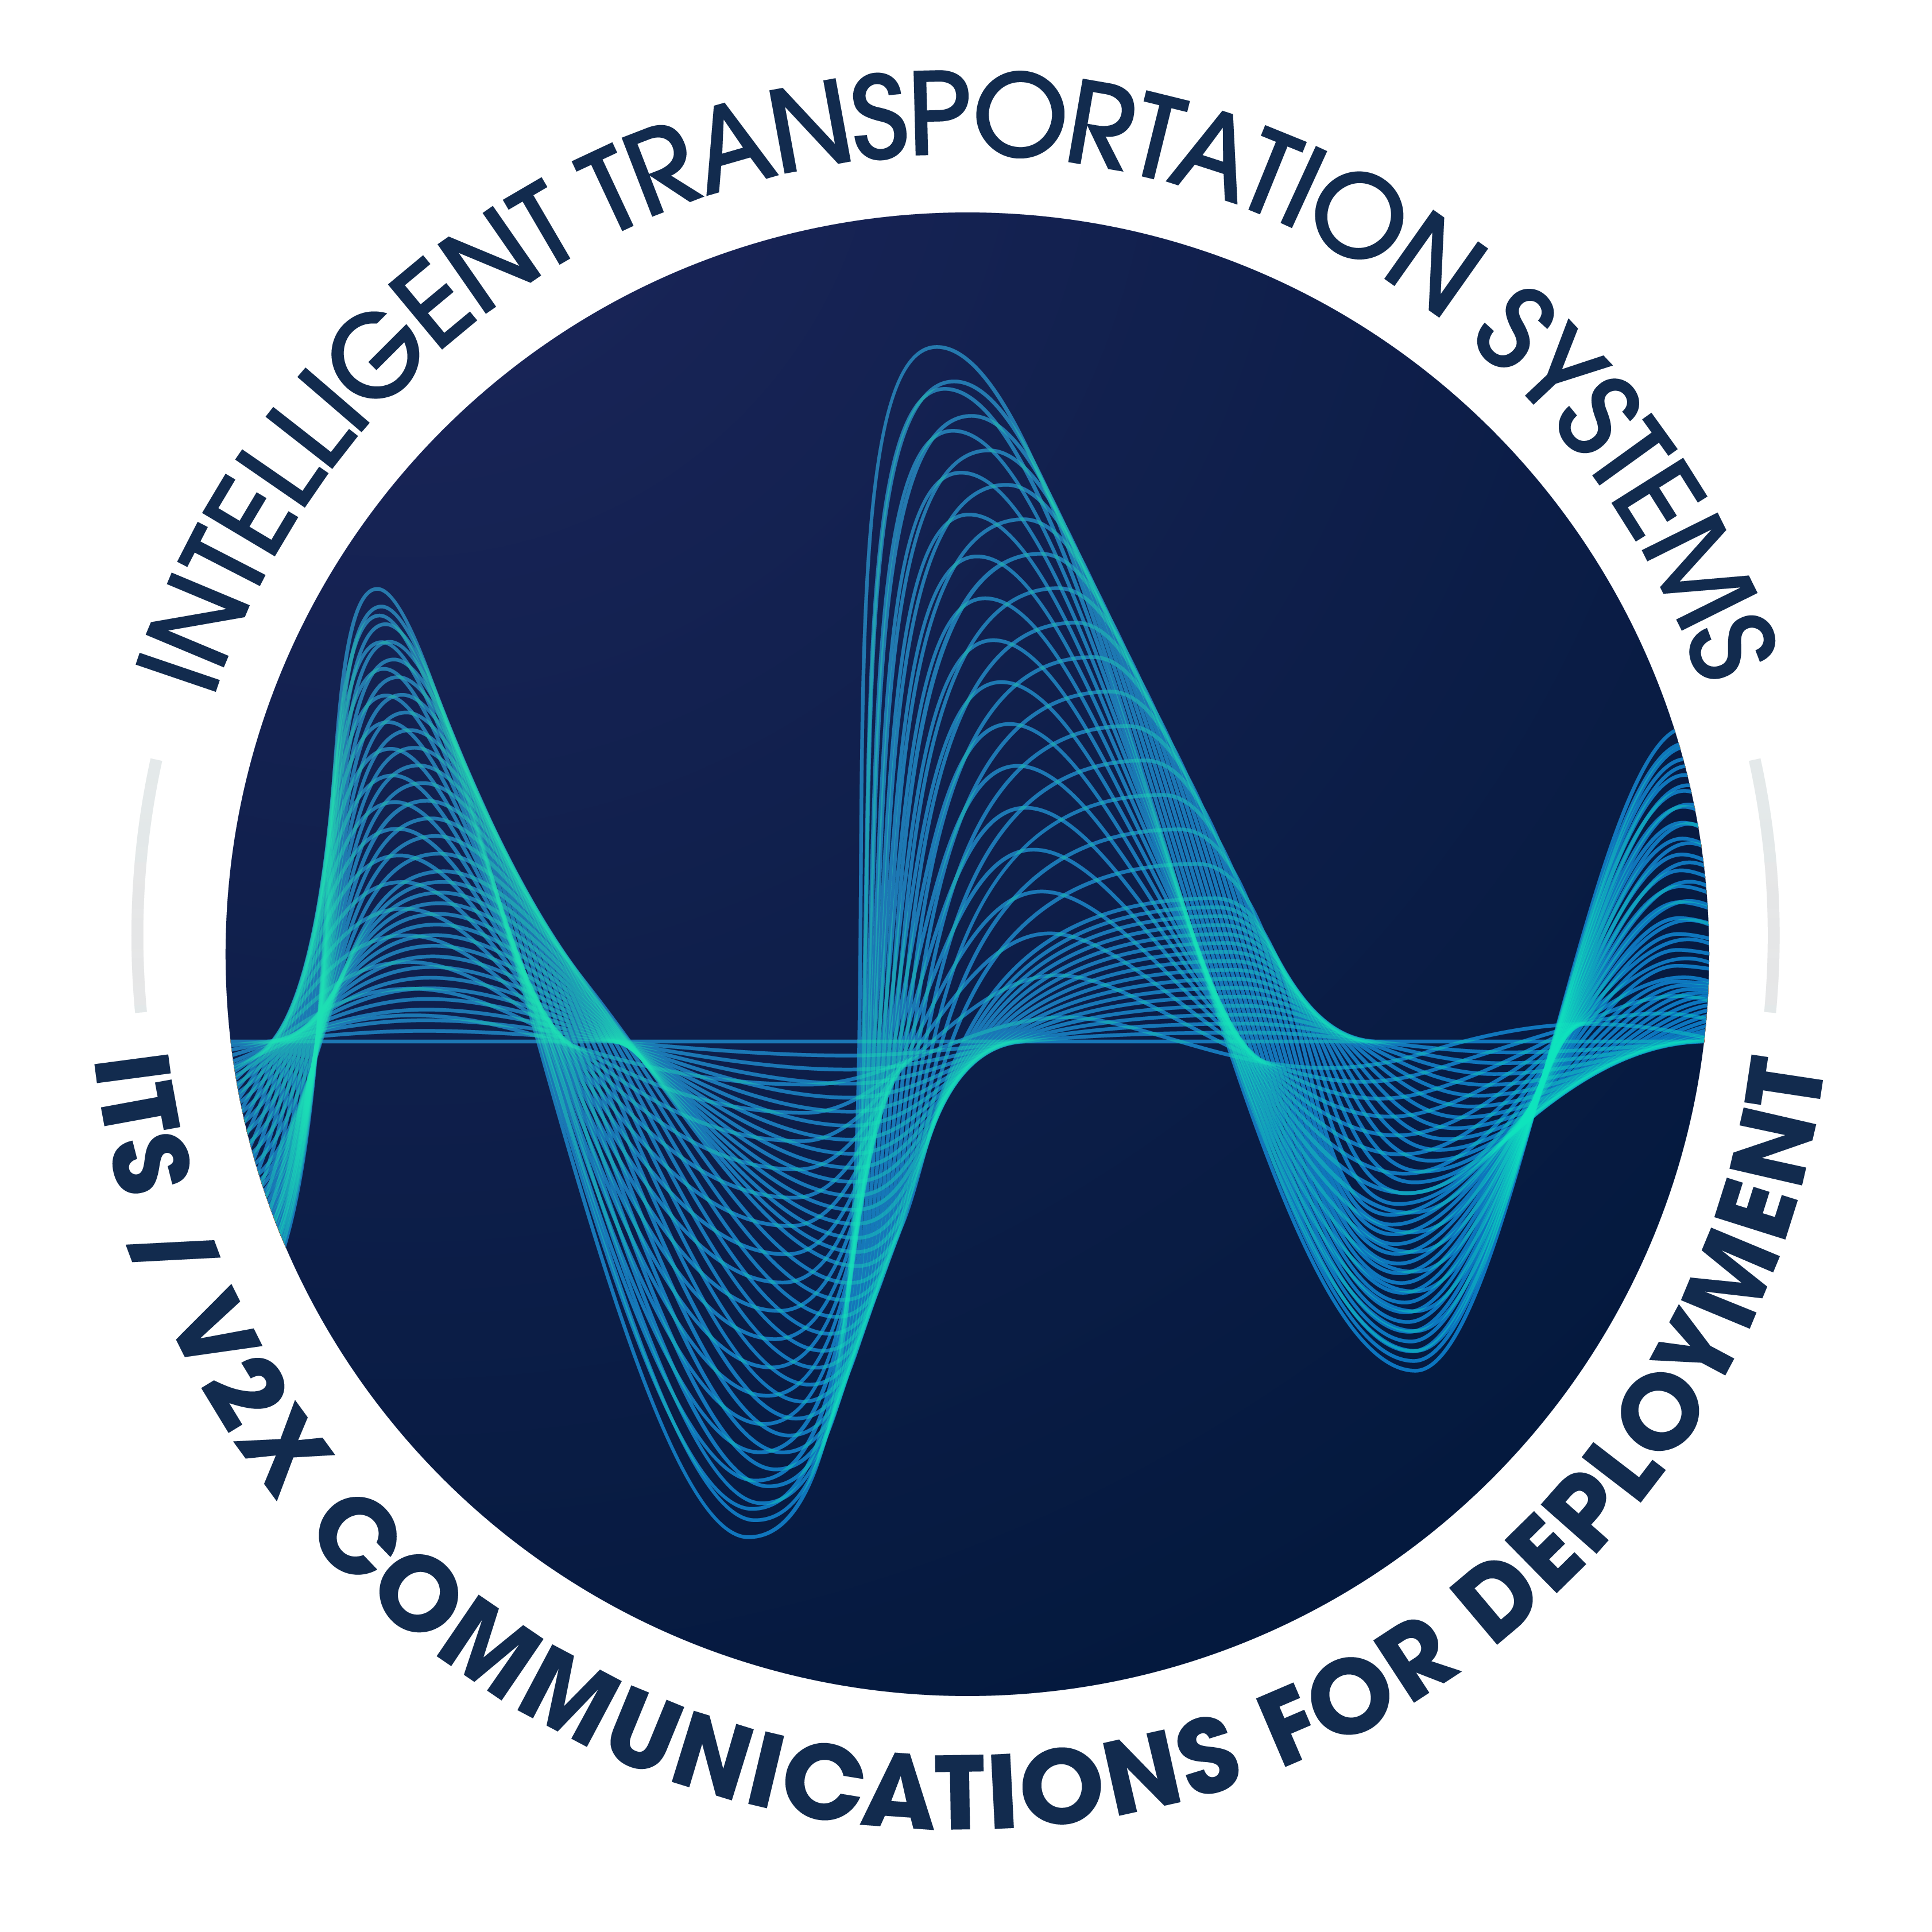 ITS V2X Communications for Deployment Logo